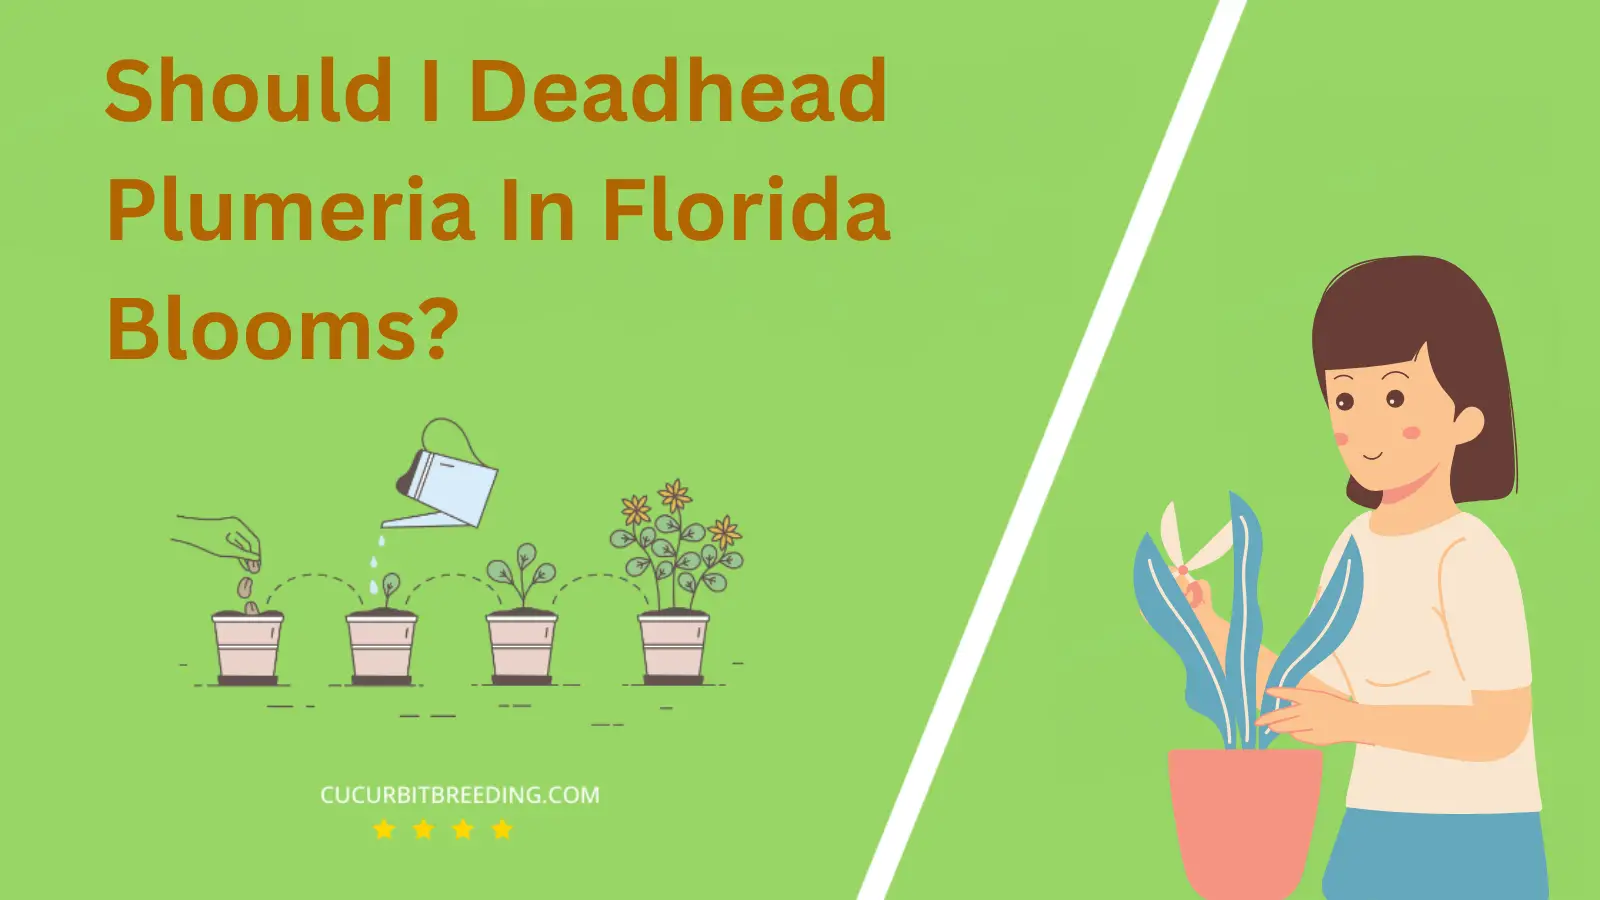 Should I Deadhead Plumeria In Florida Blooms?